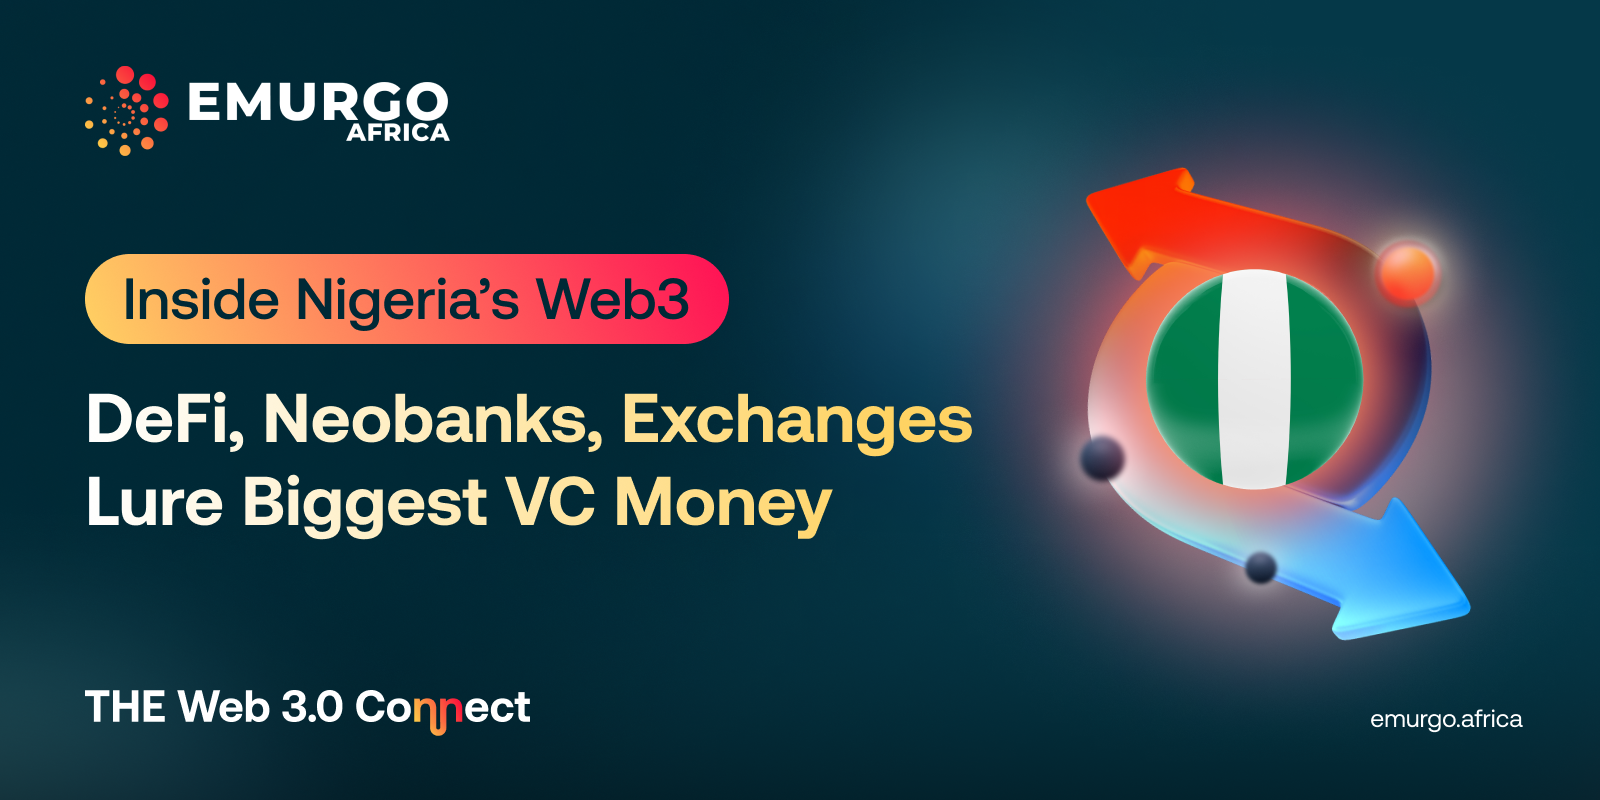 DeFi, Neobanks, Exchanges Lure Biggest VC Money: Inside Nigeria’s Web3